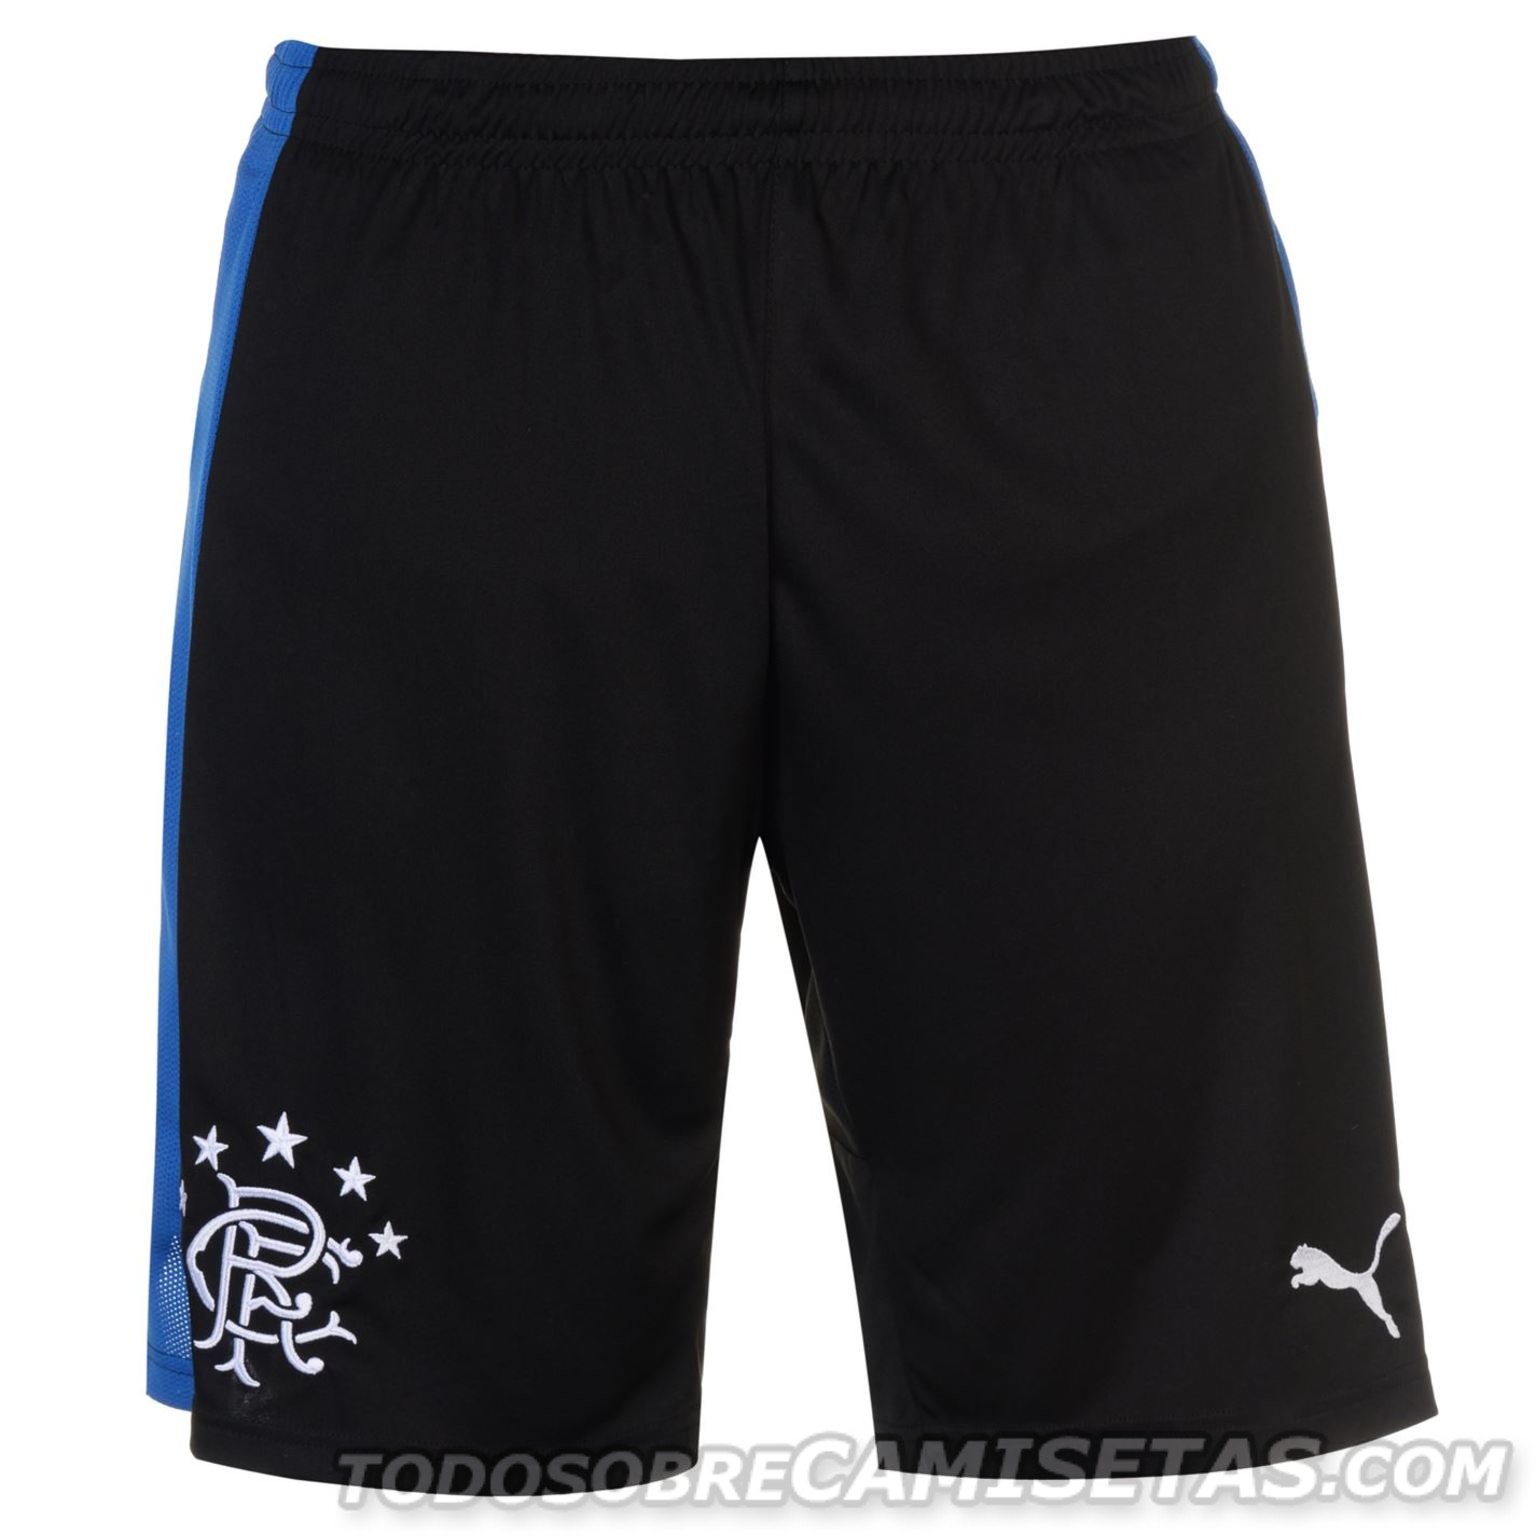 Rangers FC Puma 2017-18 Third Kit